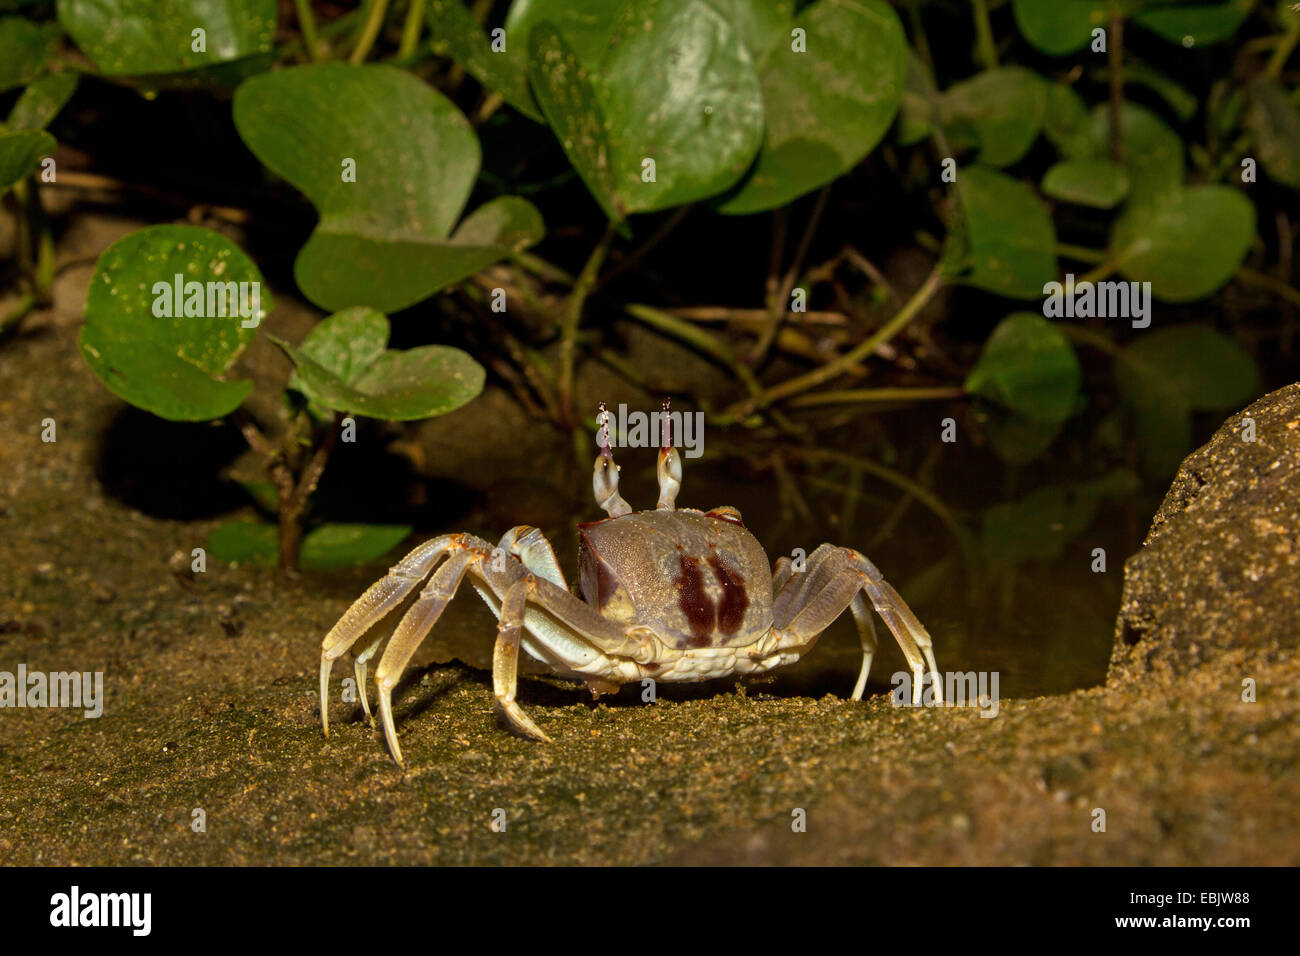 ghost crab, fiddler crab (Ocypode ceratophthalmus, Ocypode ceratophthalma), on the beach, Thailand, Phuket Stock Photo